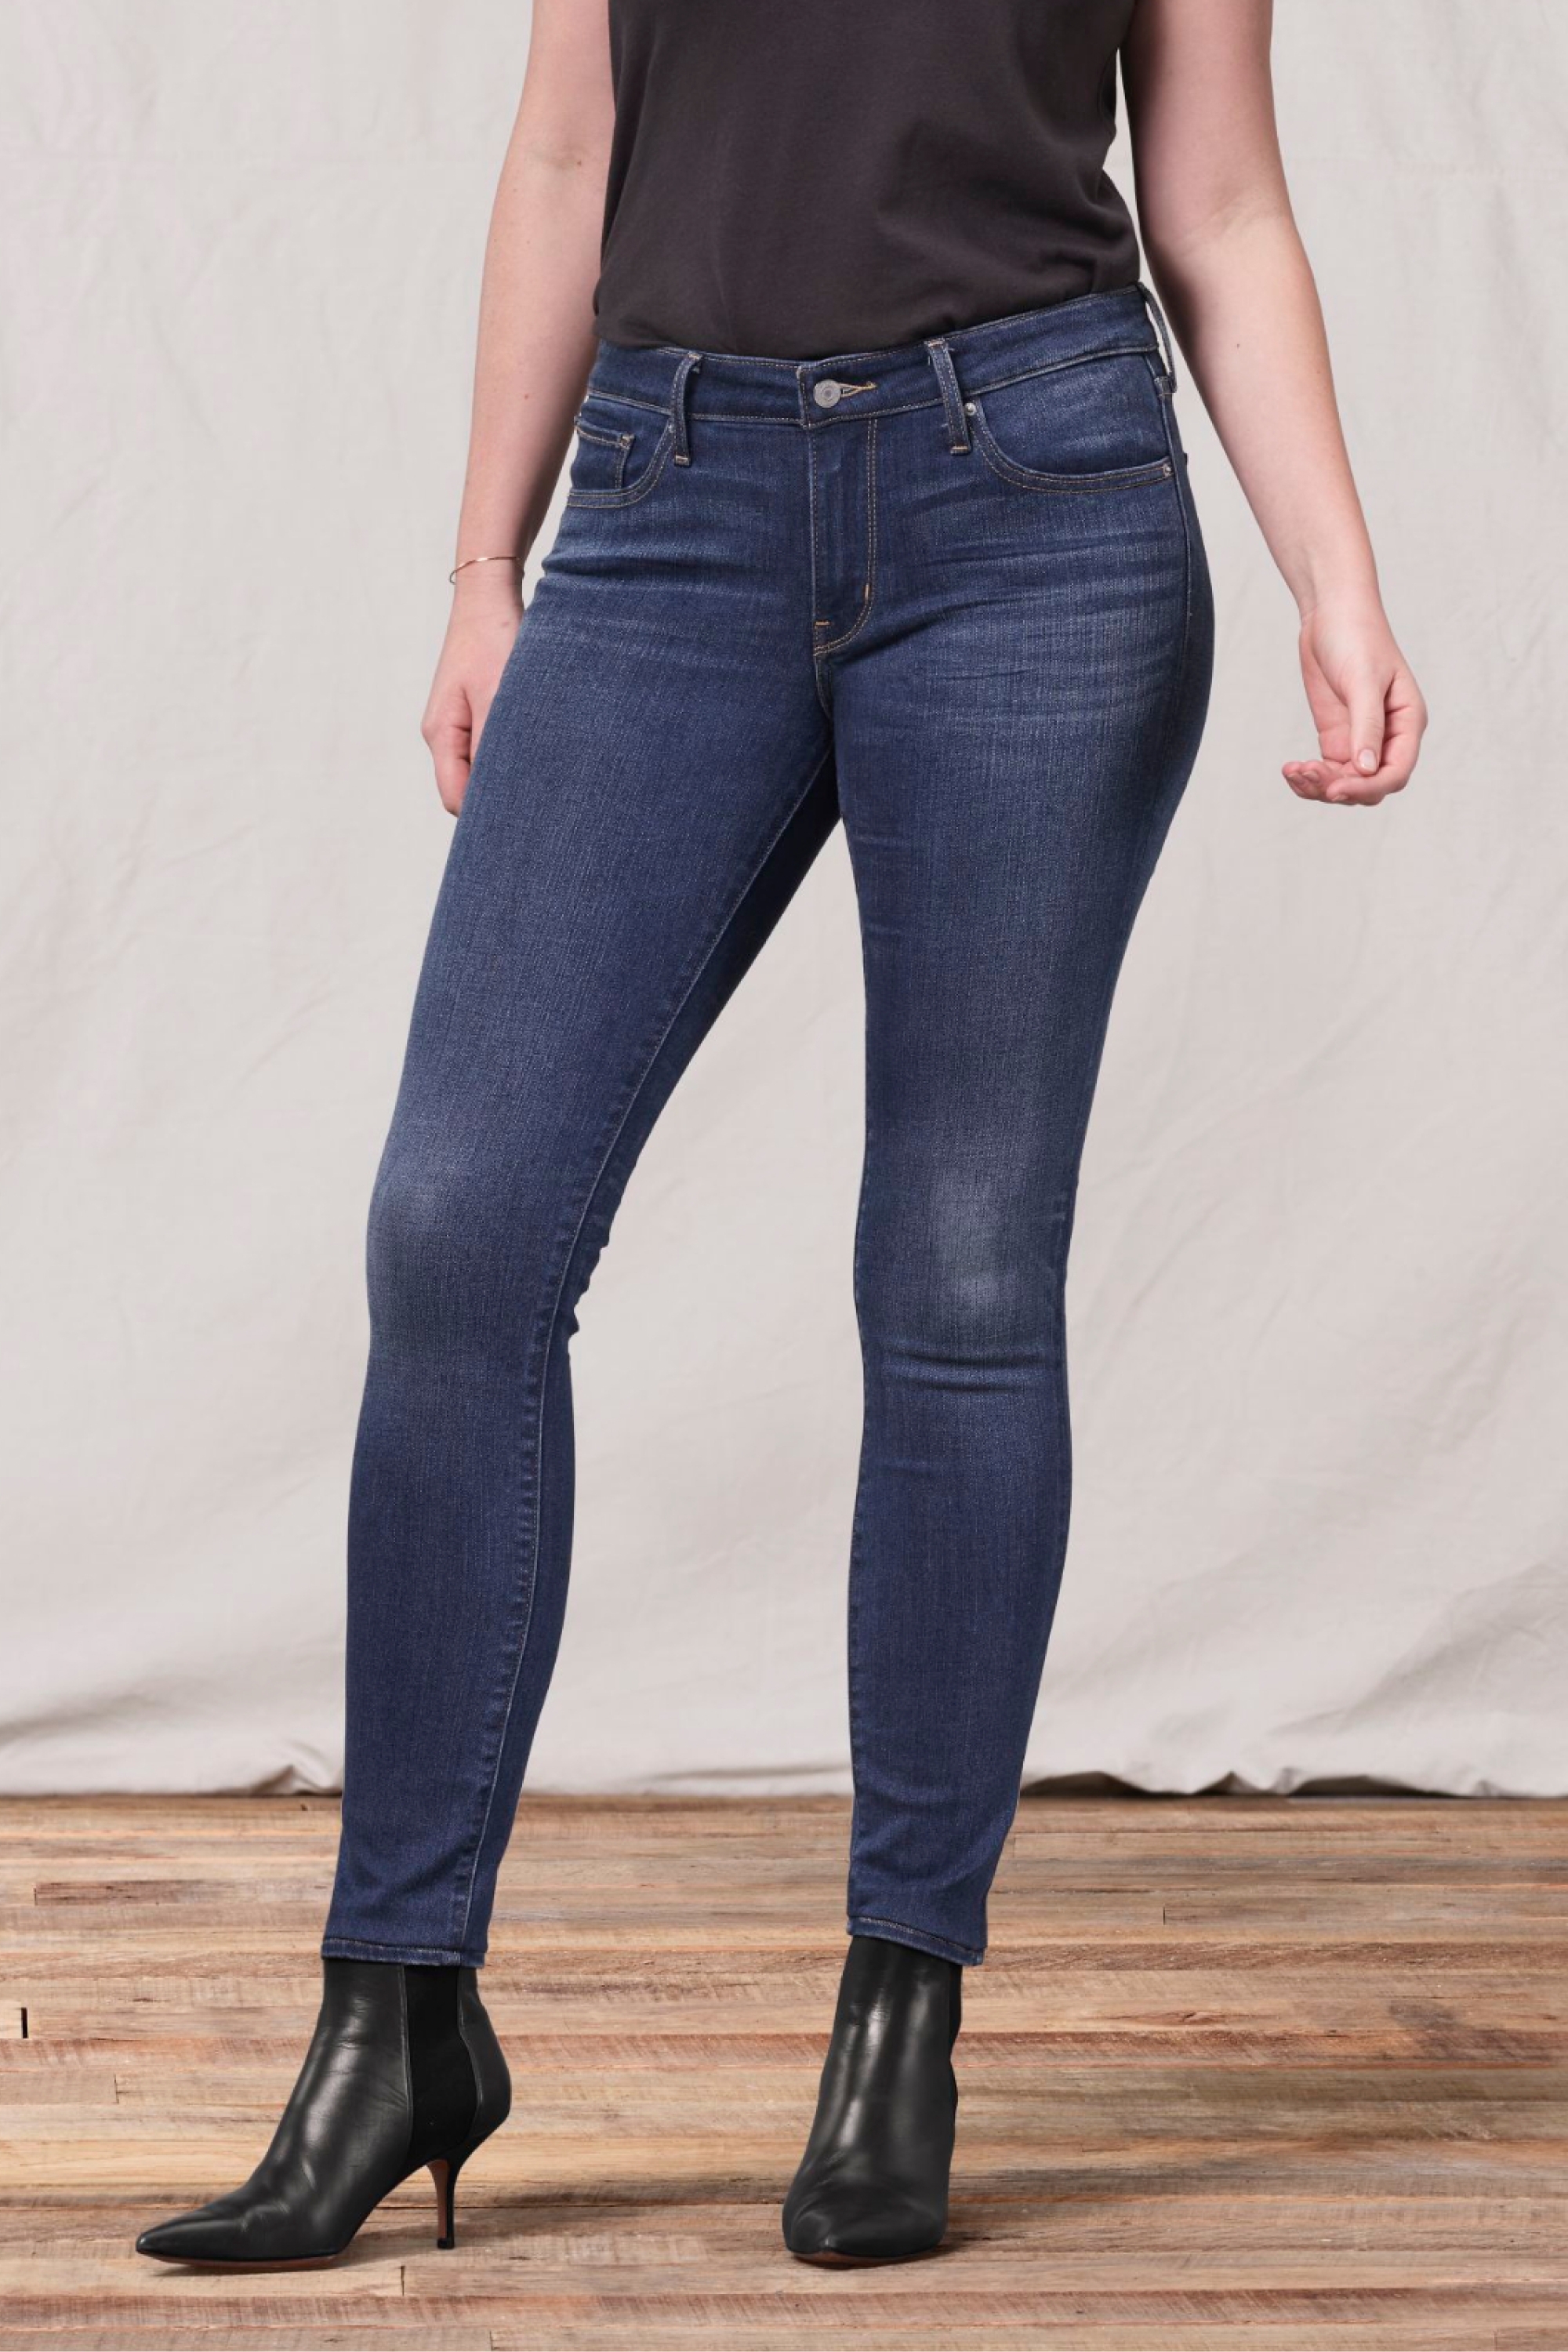 levi's jeans women's